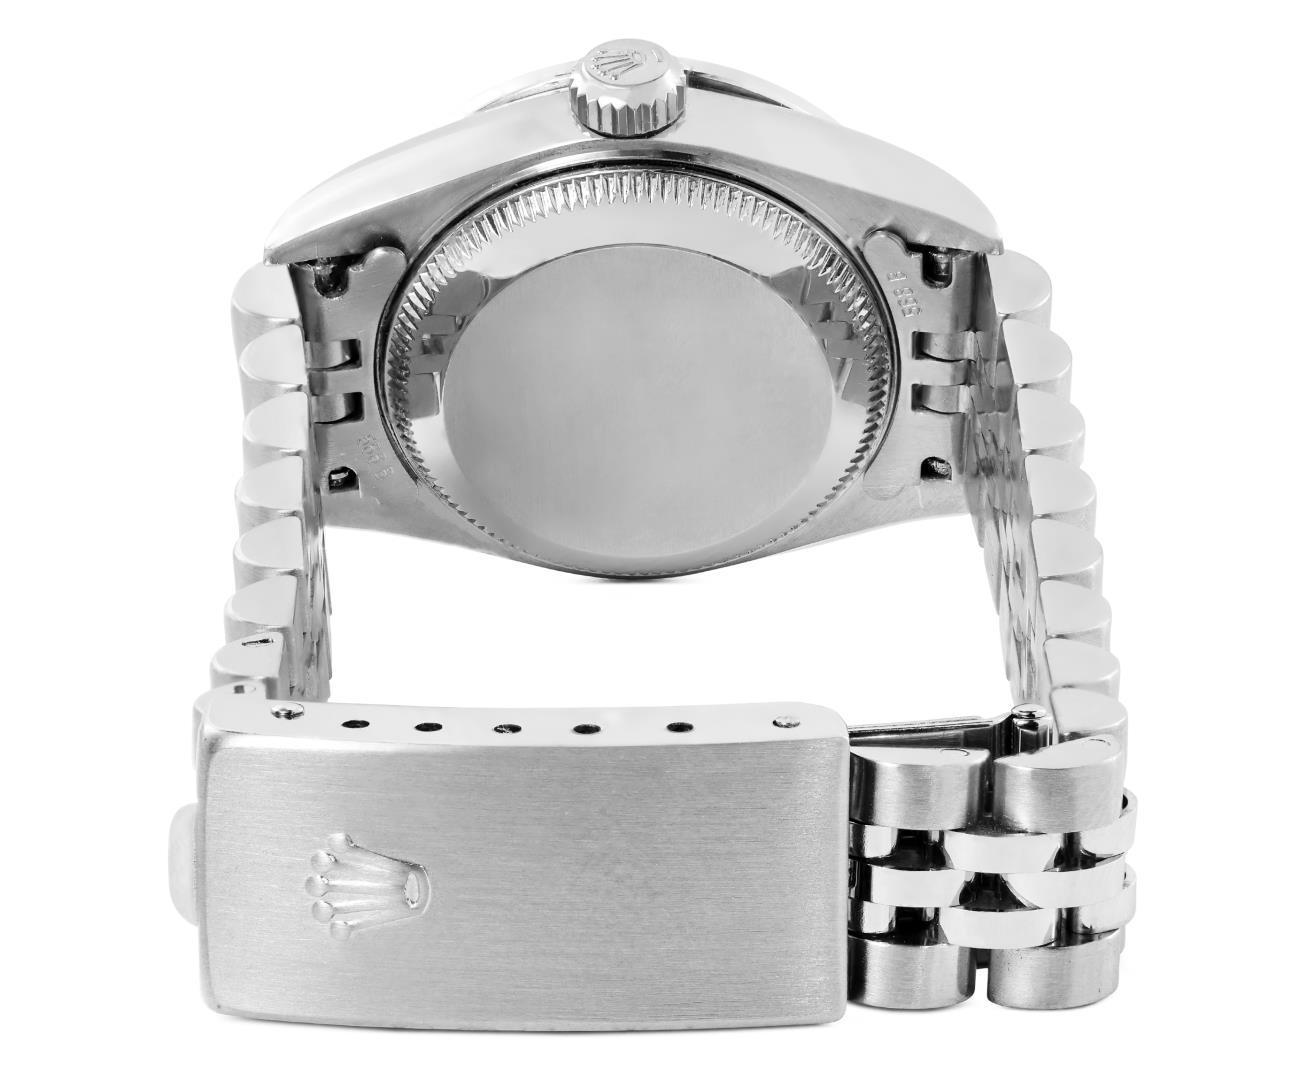 Rolex Ladies Stainless Steel Salmon Roman Ruby and Diamond Datejust Wristwatch